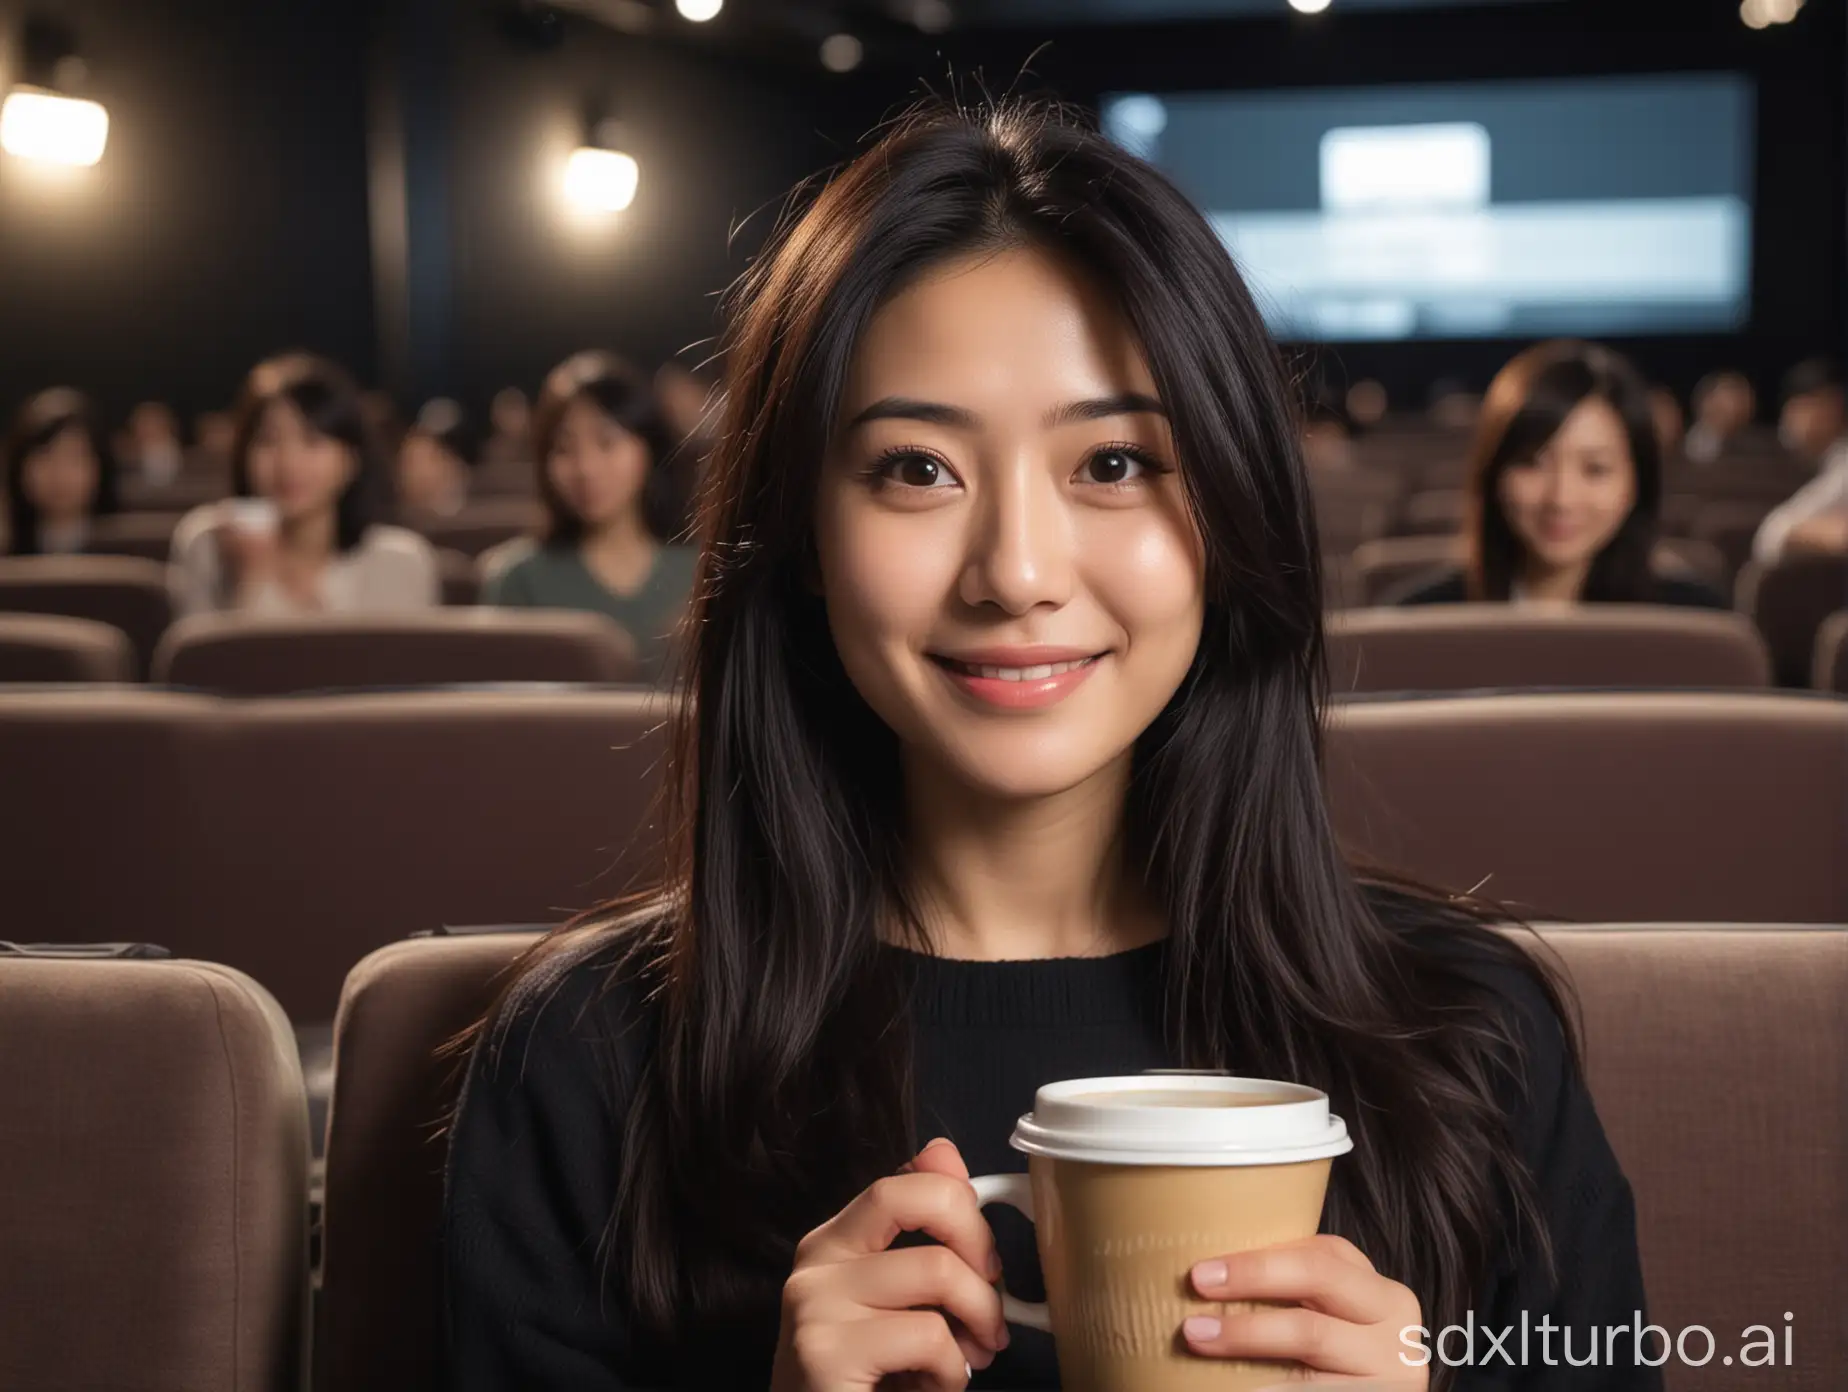 Stylish-Japanese-Woman-Enjoying-Movie-Night-with-Coffee-in-Dimly-Lit-Theatre